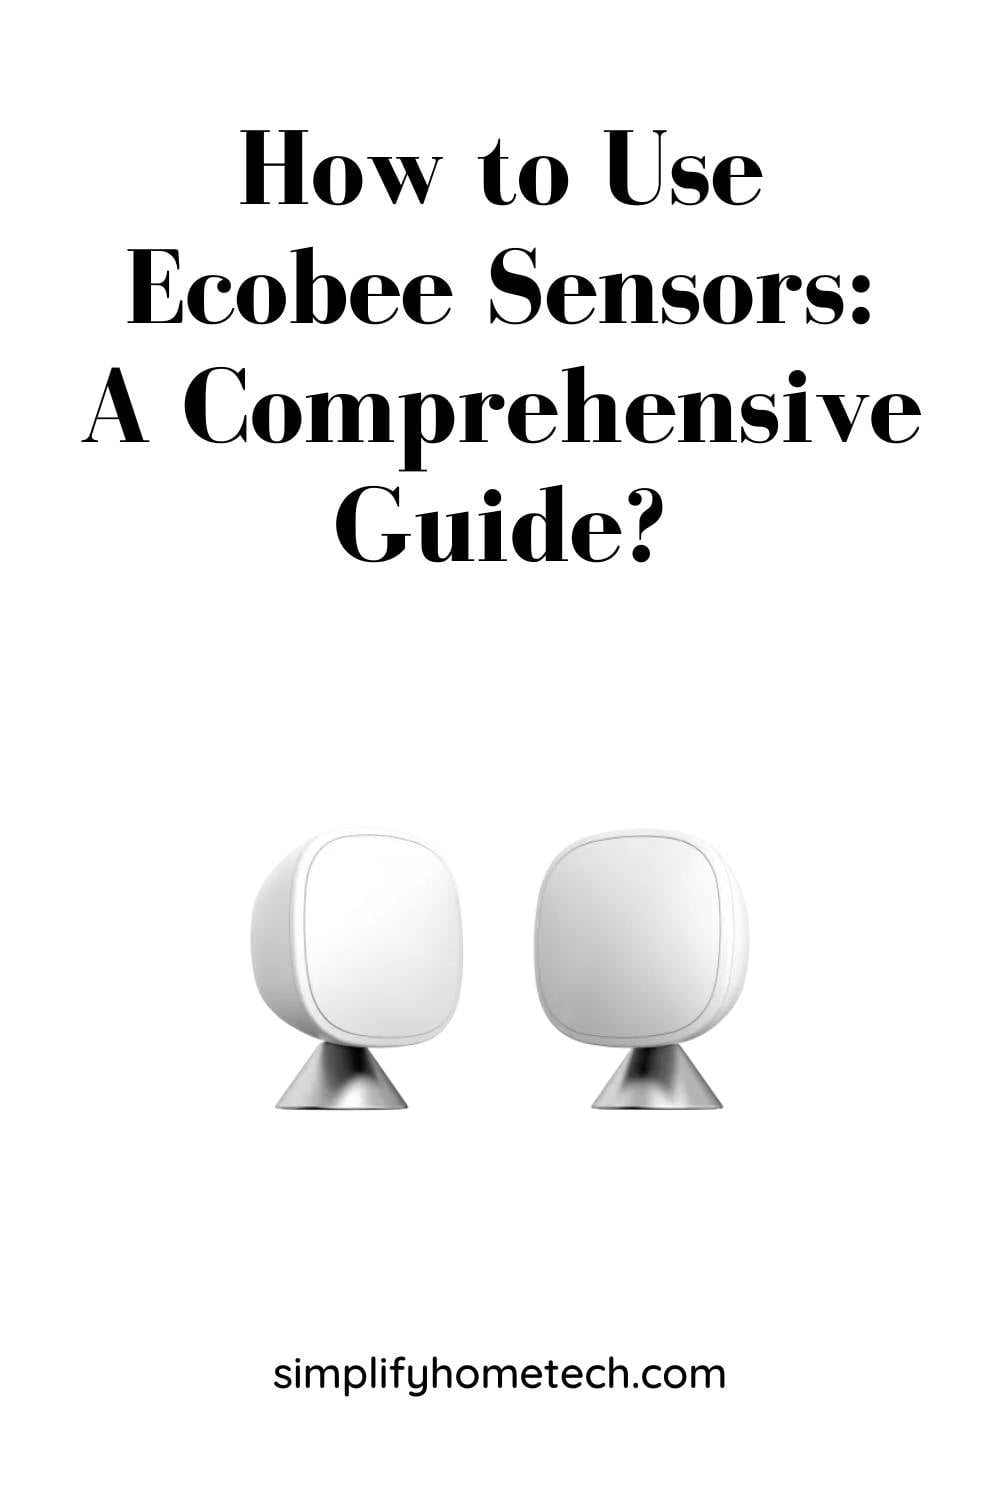 How to use Ecobee Sensors